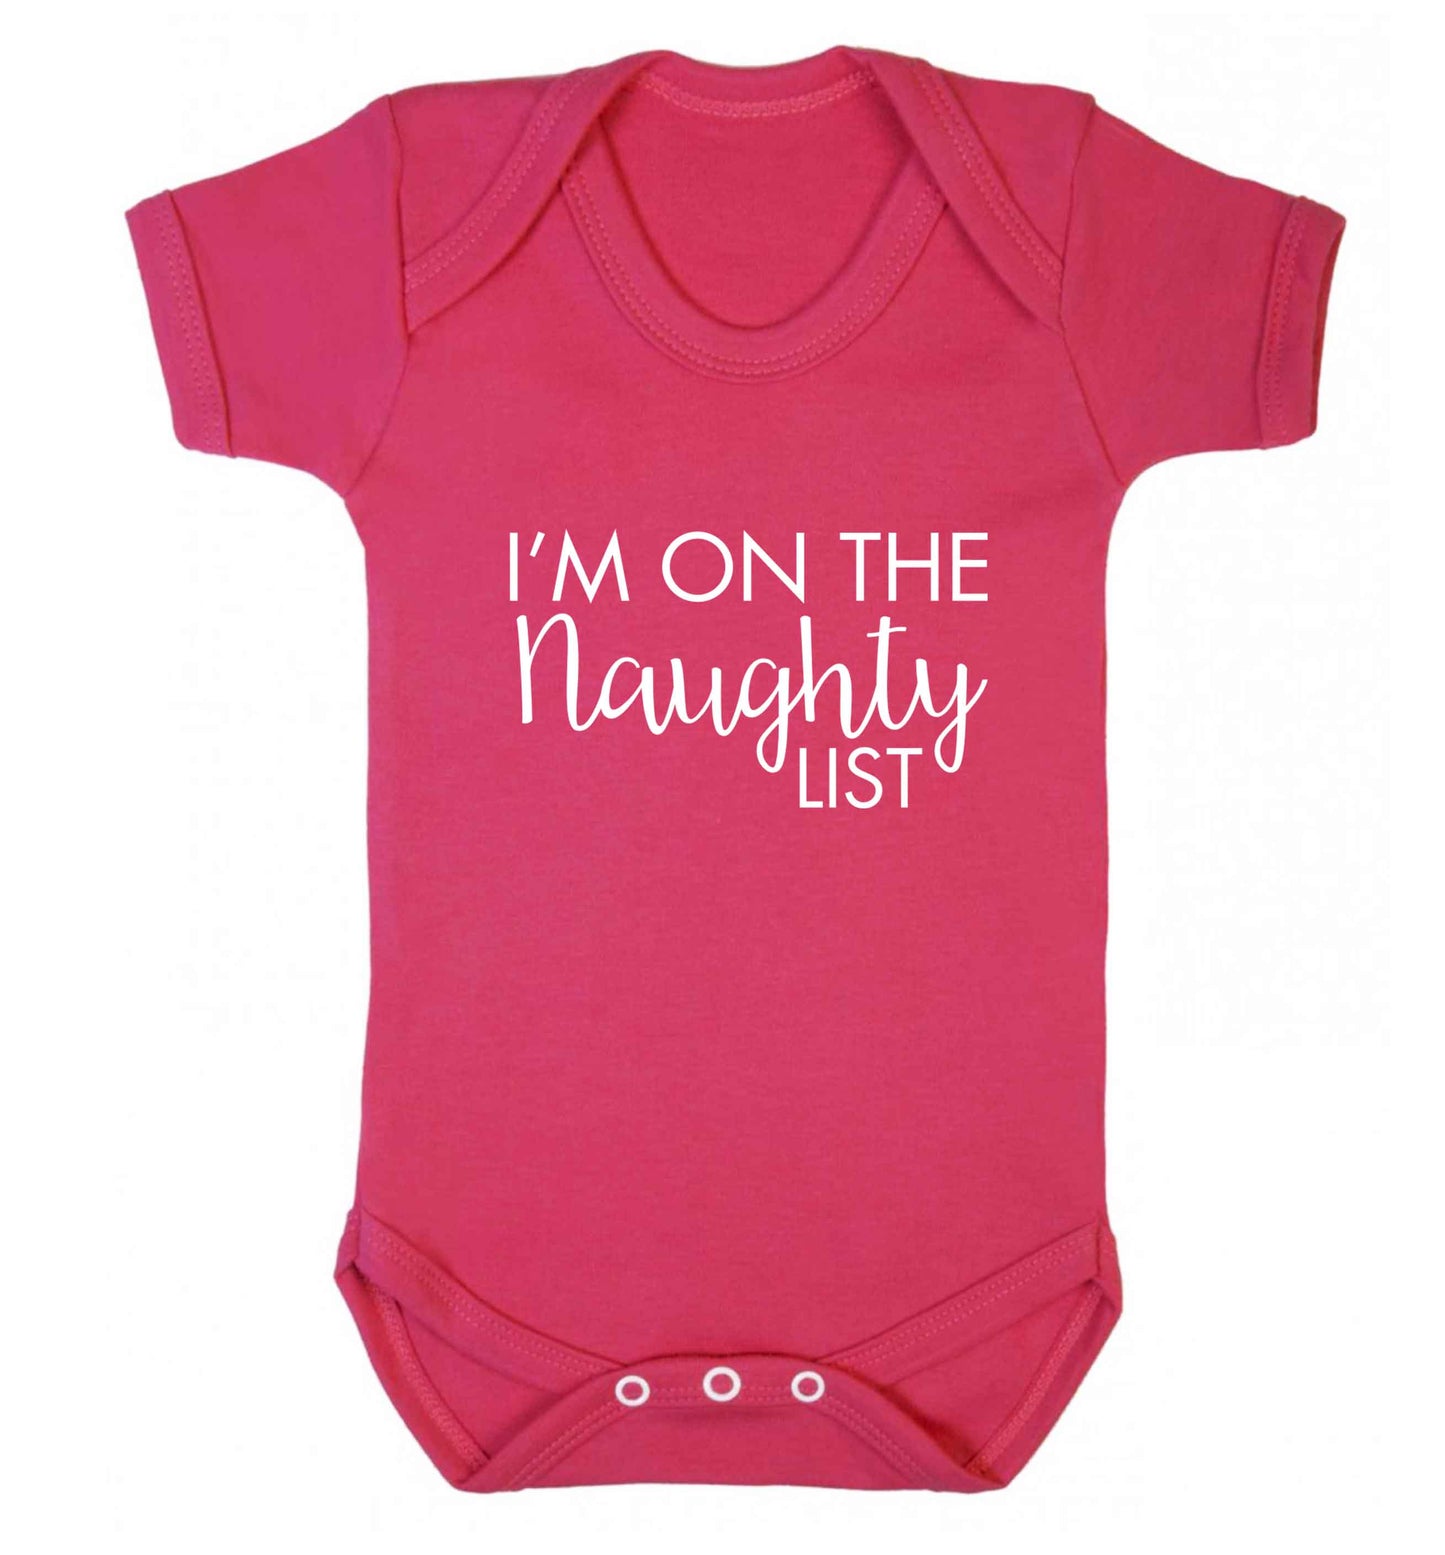 I'm on the naughty list baby vest dark pink 18-24 months